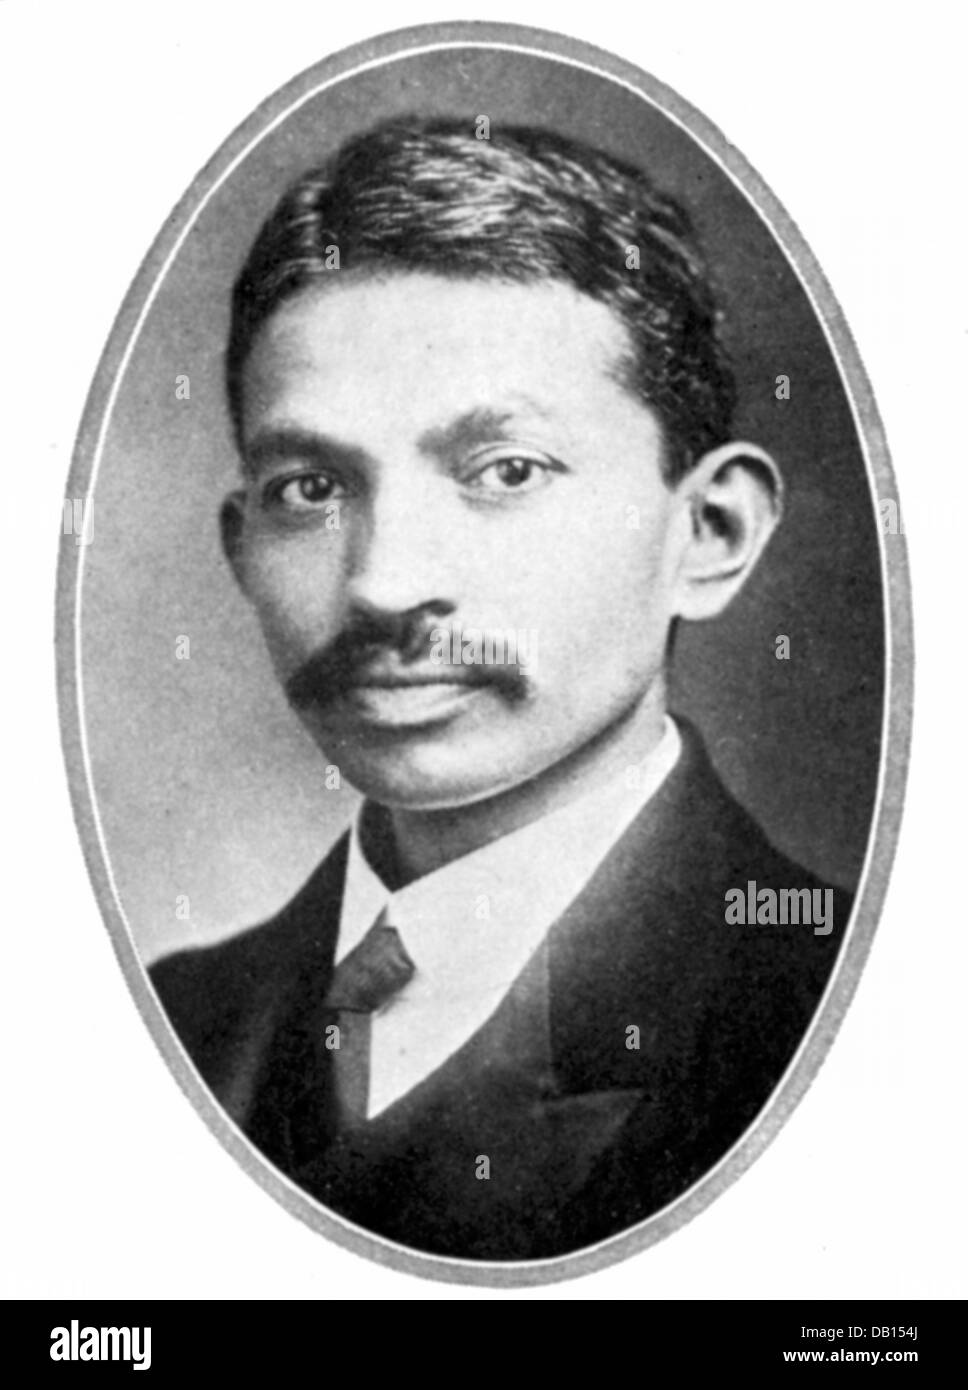 Mohondas Karamchand Gandhi (giovane) , noto come Mahatma - indiana leader nazionalista Foto Stock